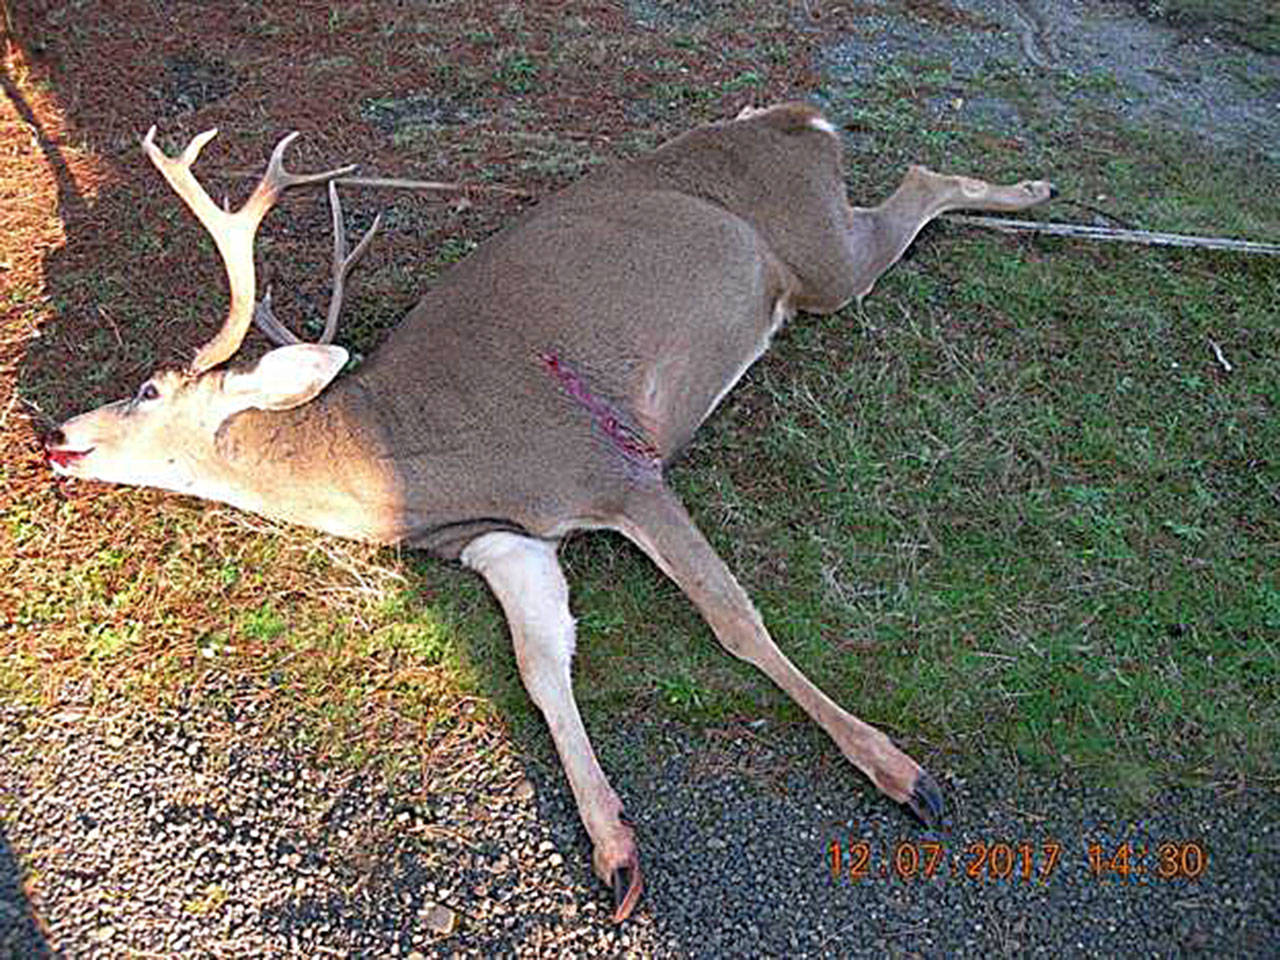 NCN911: State investigating local deer poaching